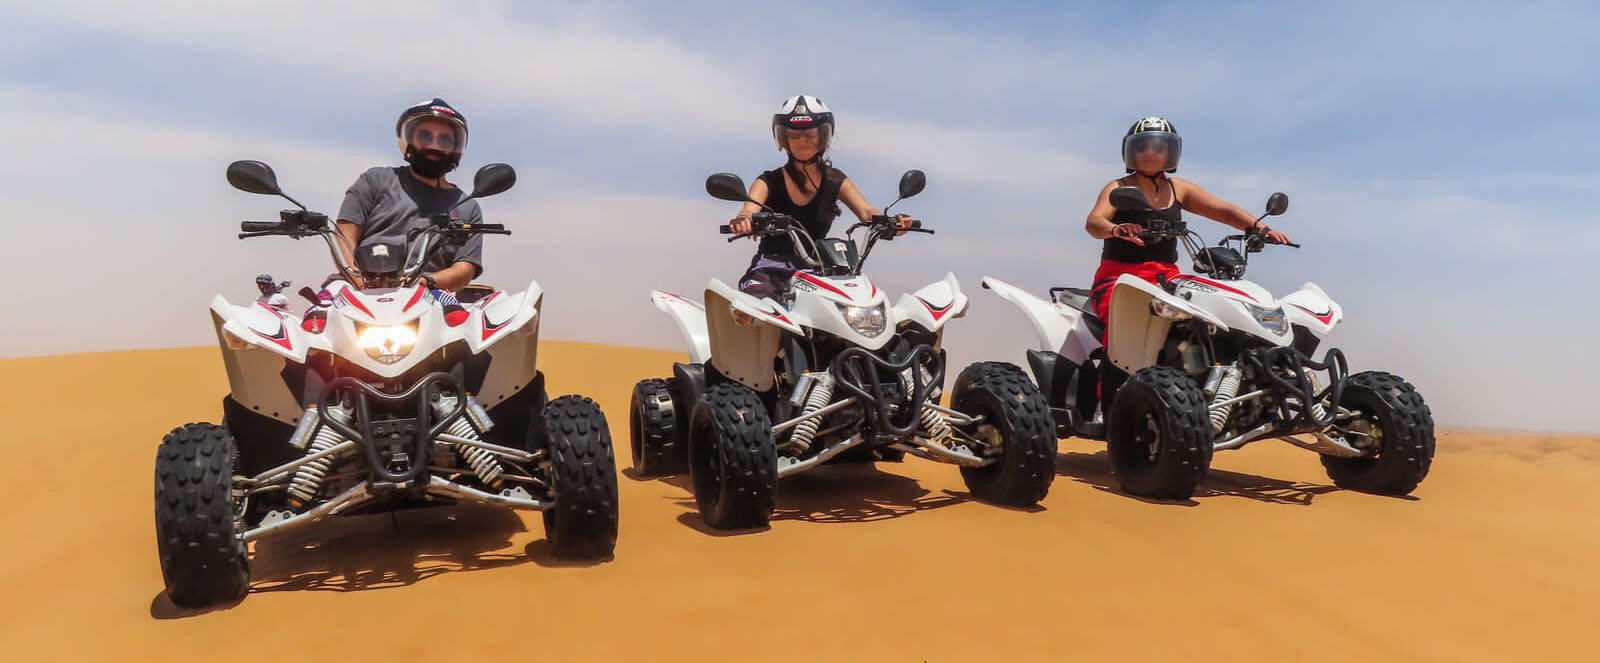 quad-bike-atv-desert-safari-adventure-tour-dubai